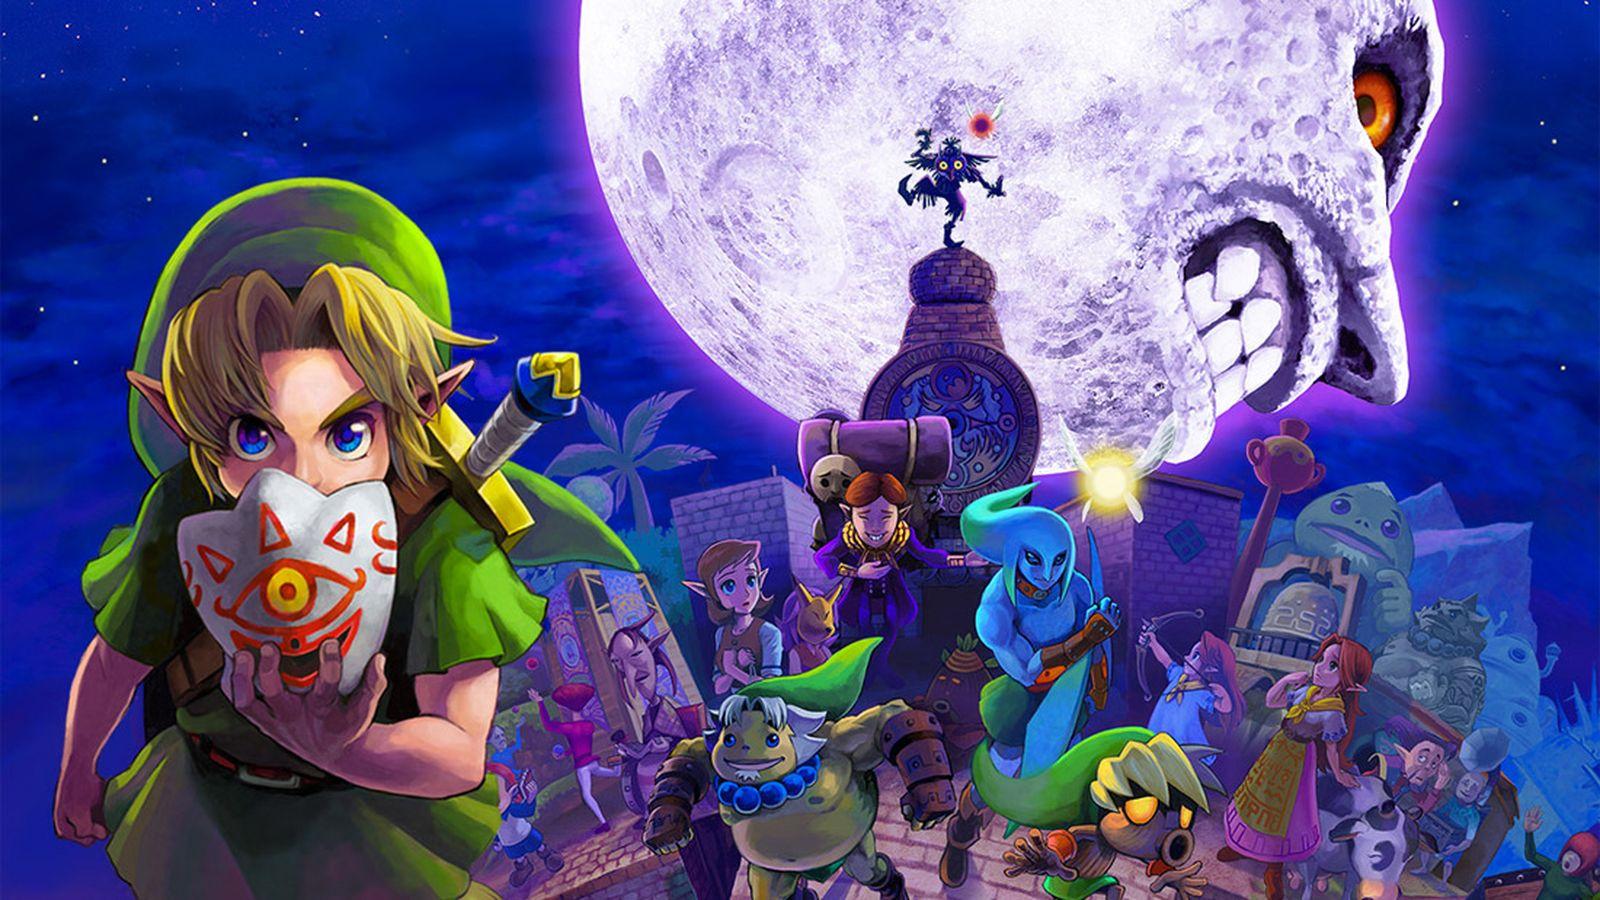 The Legend of Zelda: Majora's Mask 100% speedrun record set